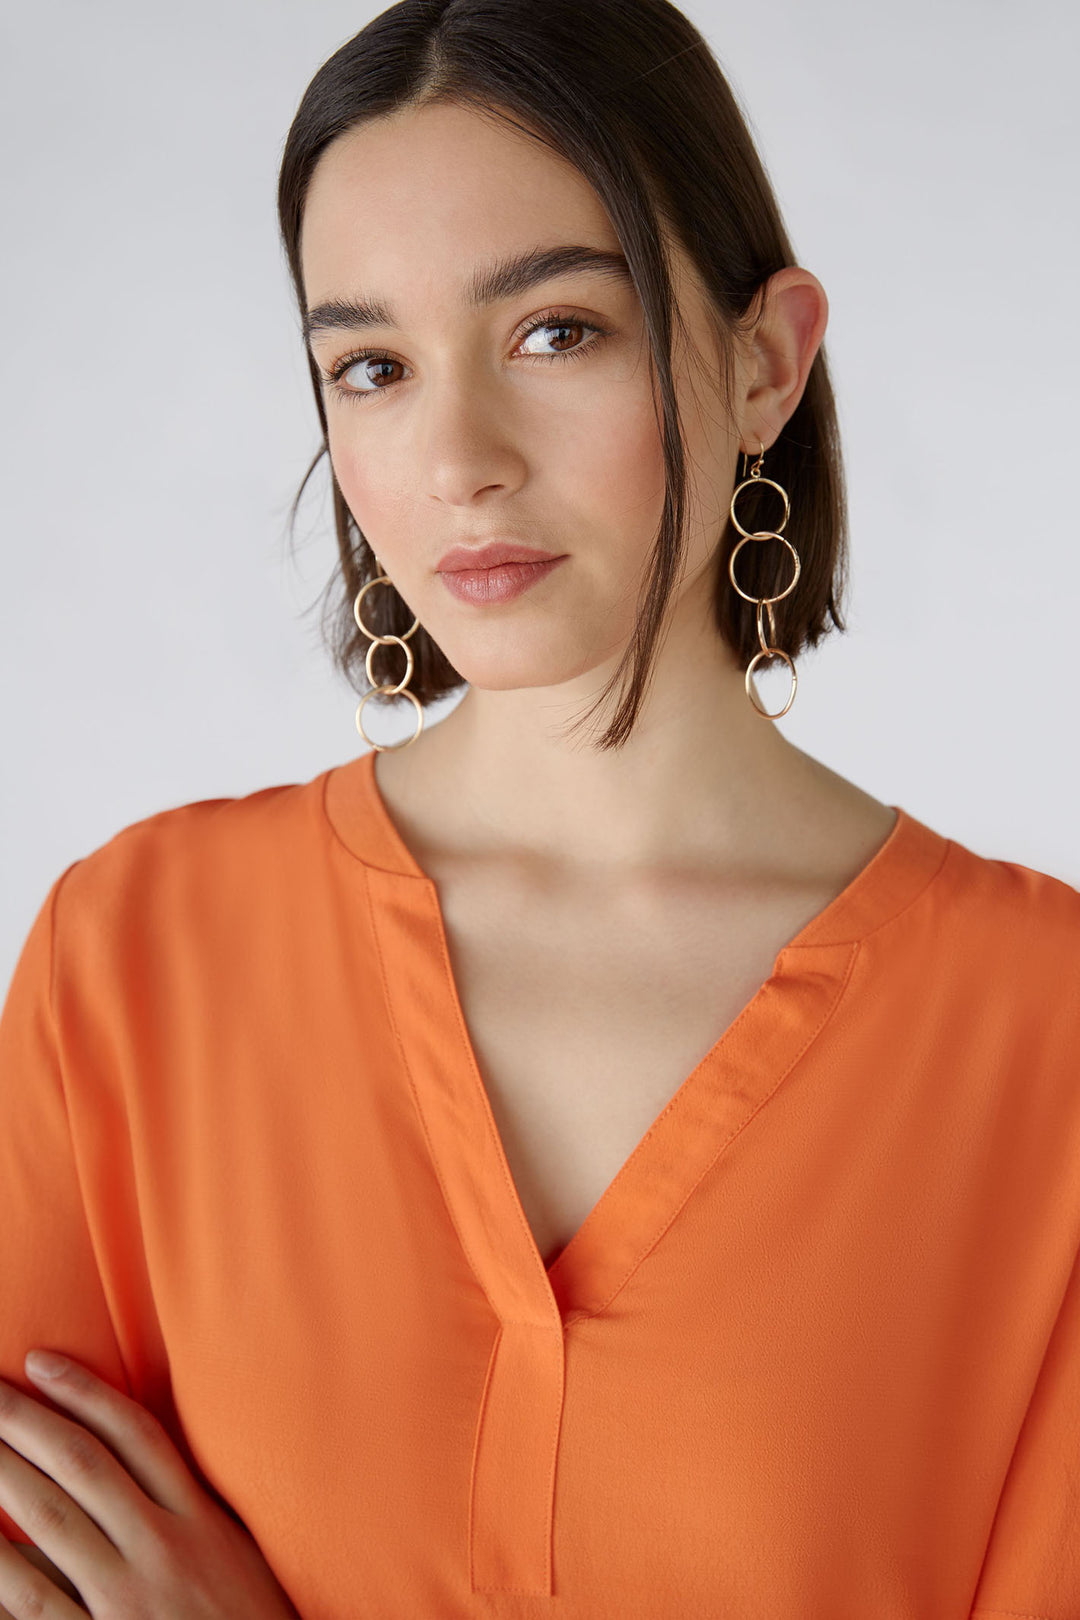 Oui 87502 Vermillion Orange Split Neck Short Sleeve Top - Olivia Grace Fashion